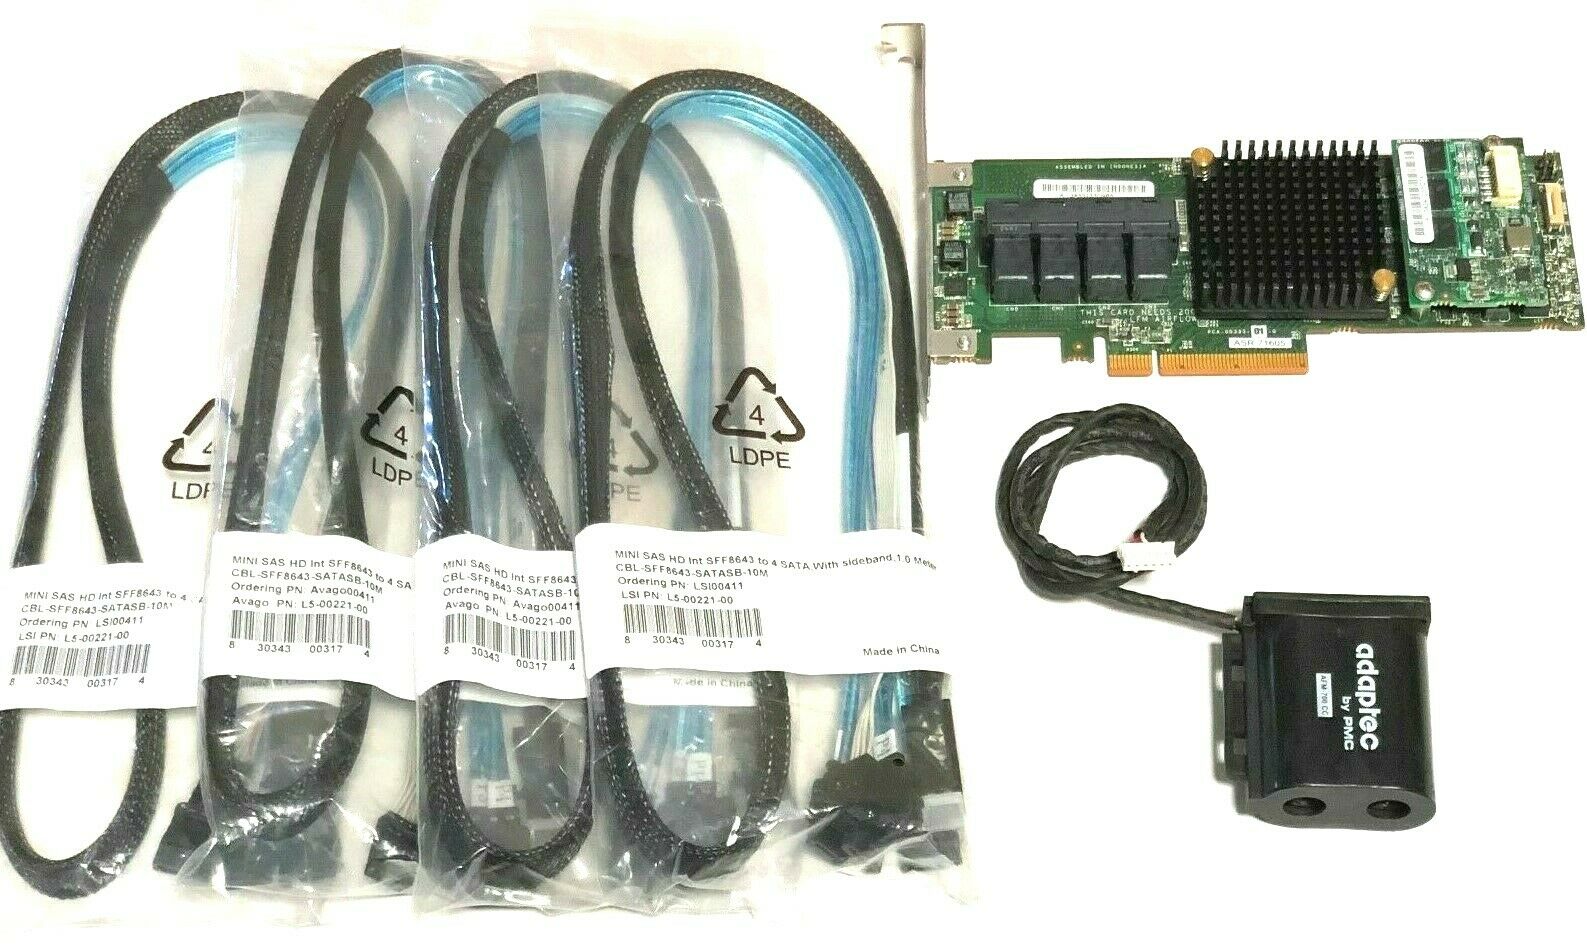 Adaptec ASR 71605 1GB 16Port HBA RAID PCIe Controller Card w/ Battery 4x Cables